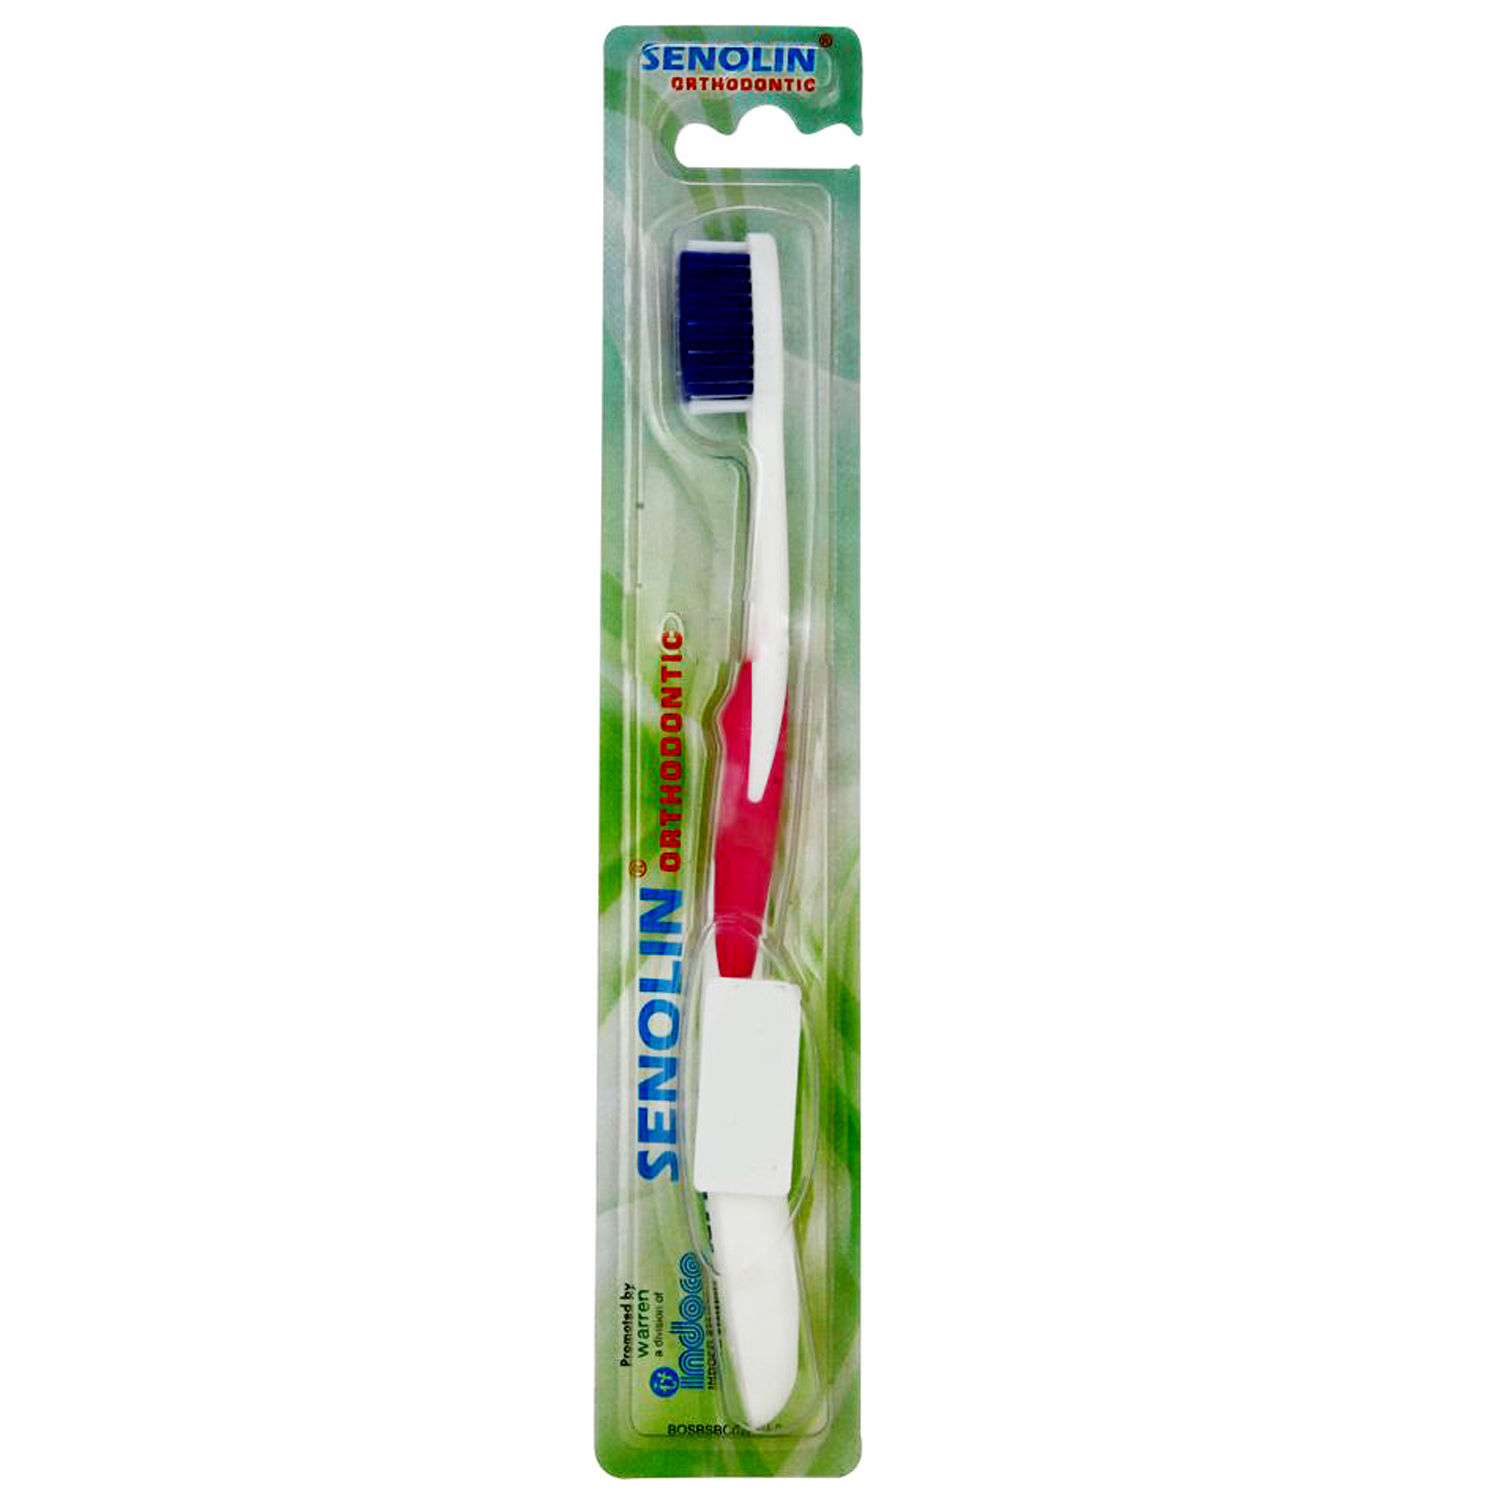 Buy Senolin Orthodontic Toothbrush, 1 Count Online